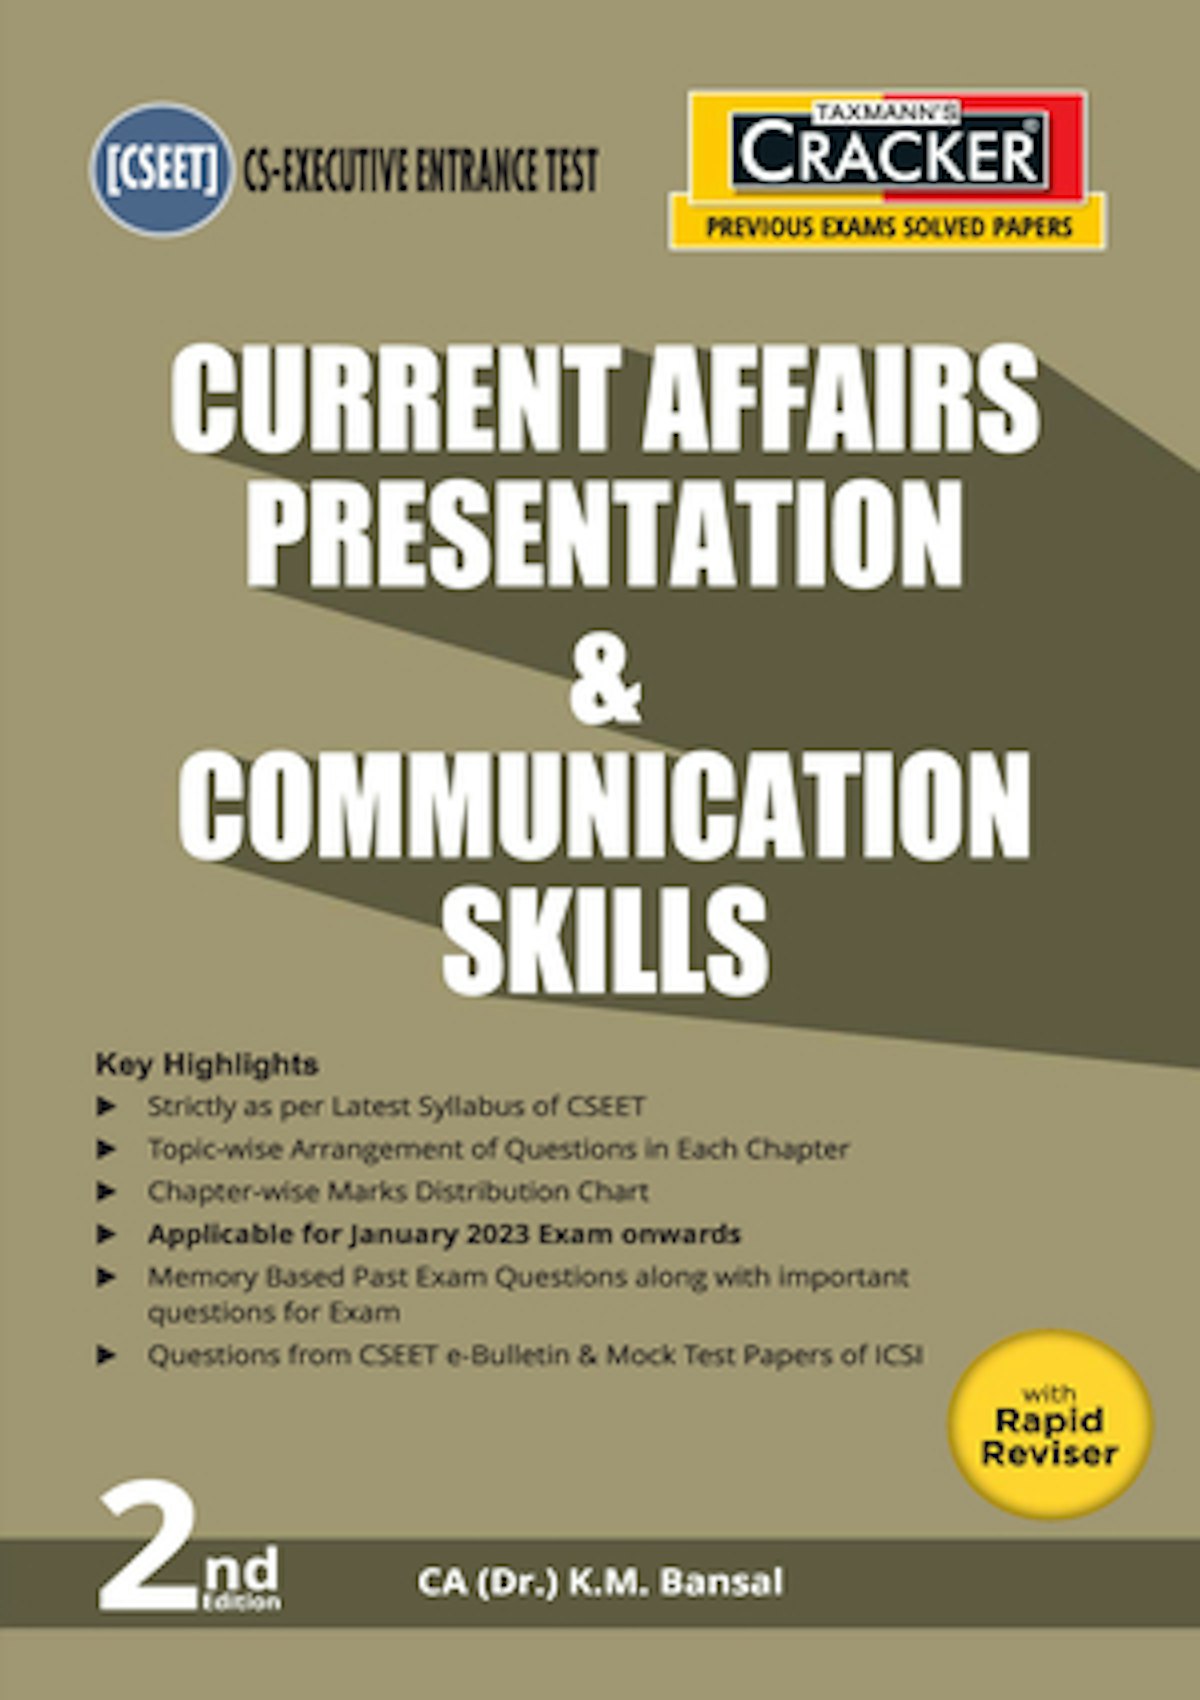 cseet presentation and communication skills pdf